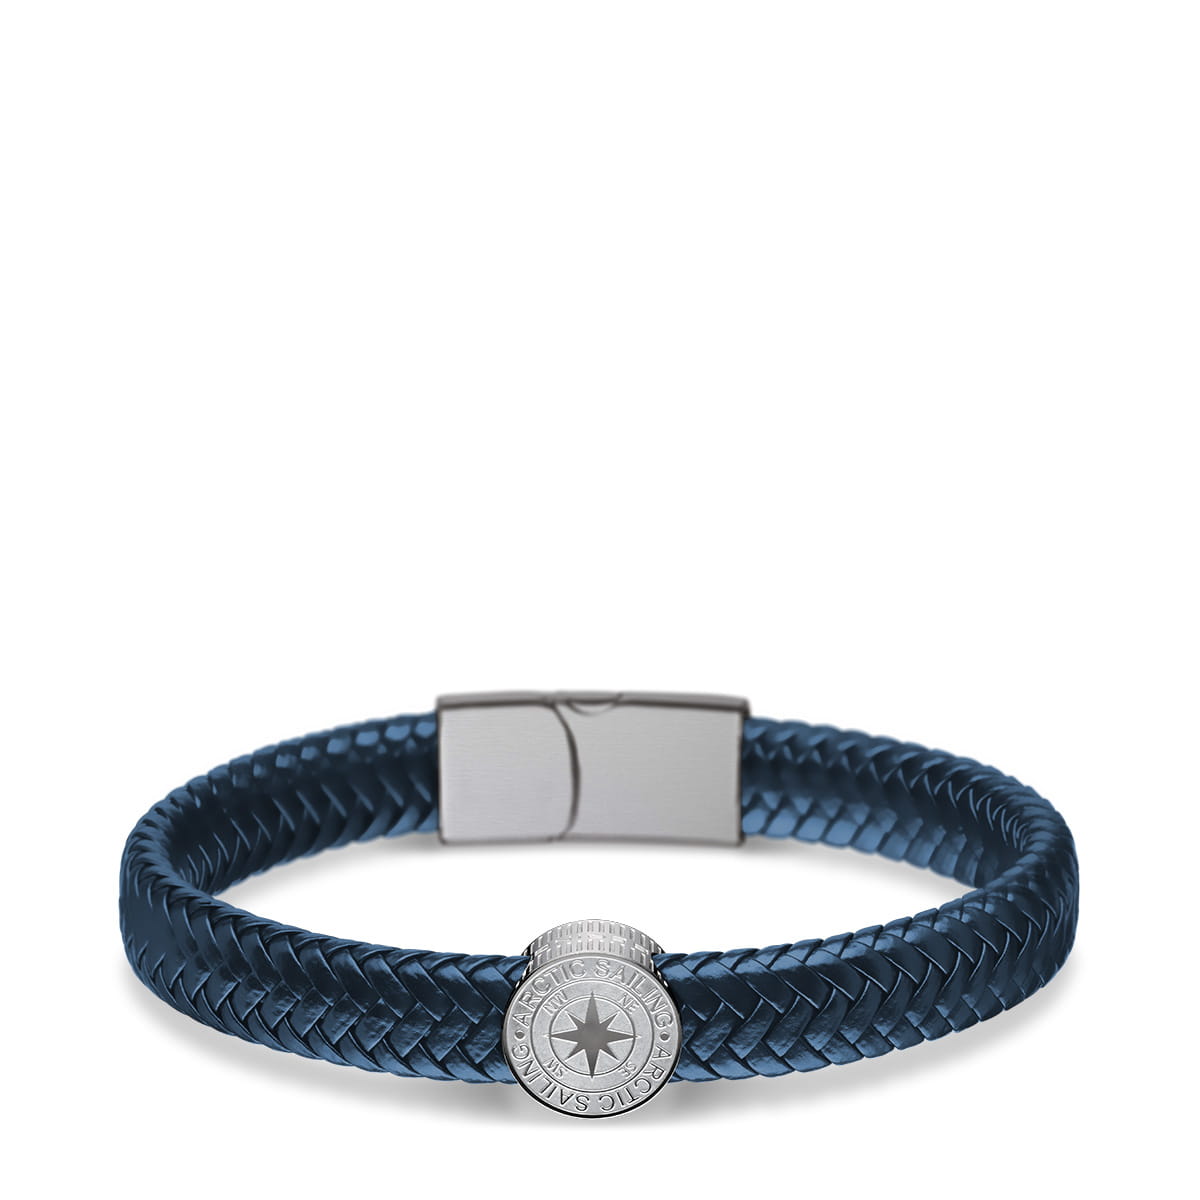 Bering Armband Edelstahl Leder Blau 633-817-X0